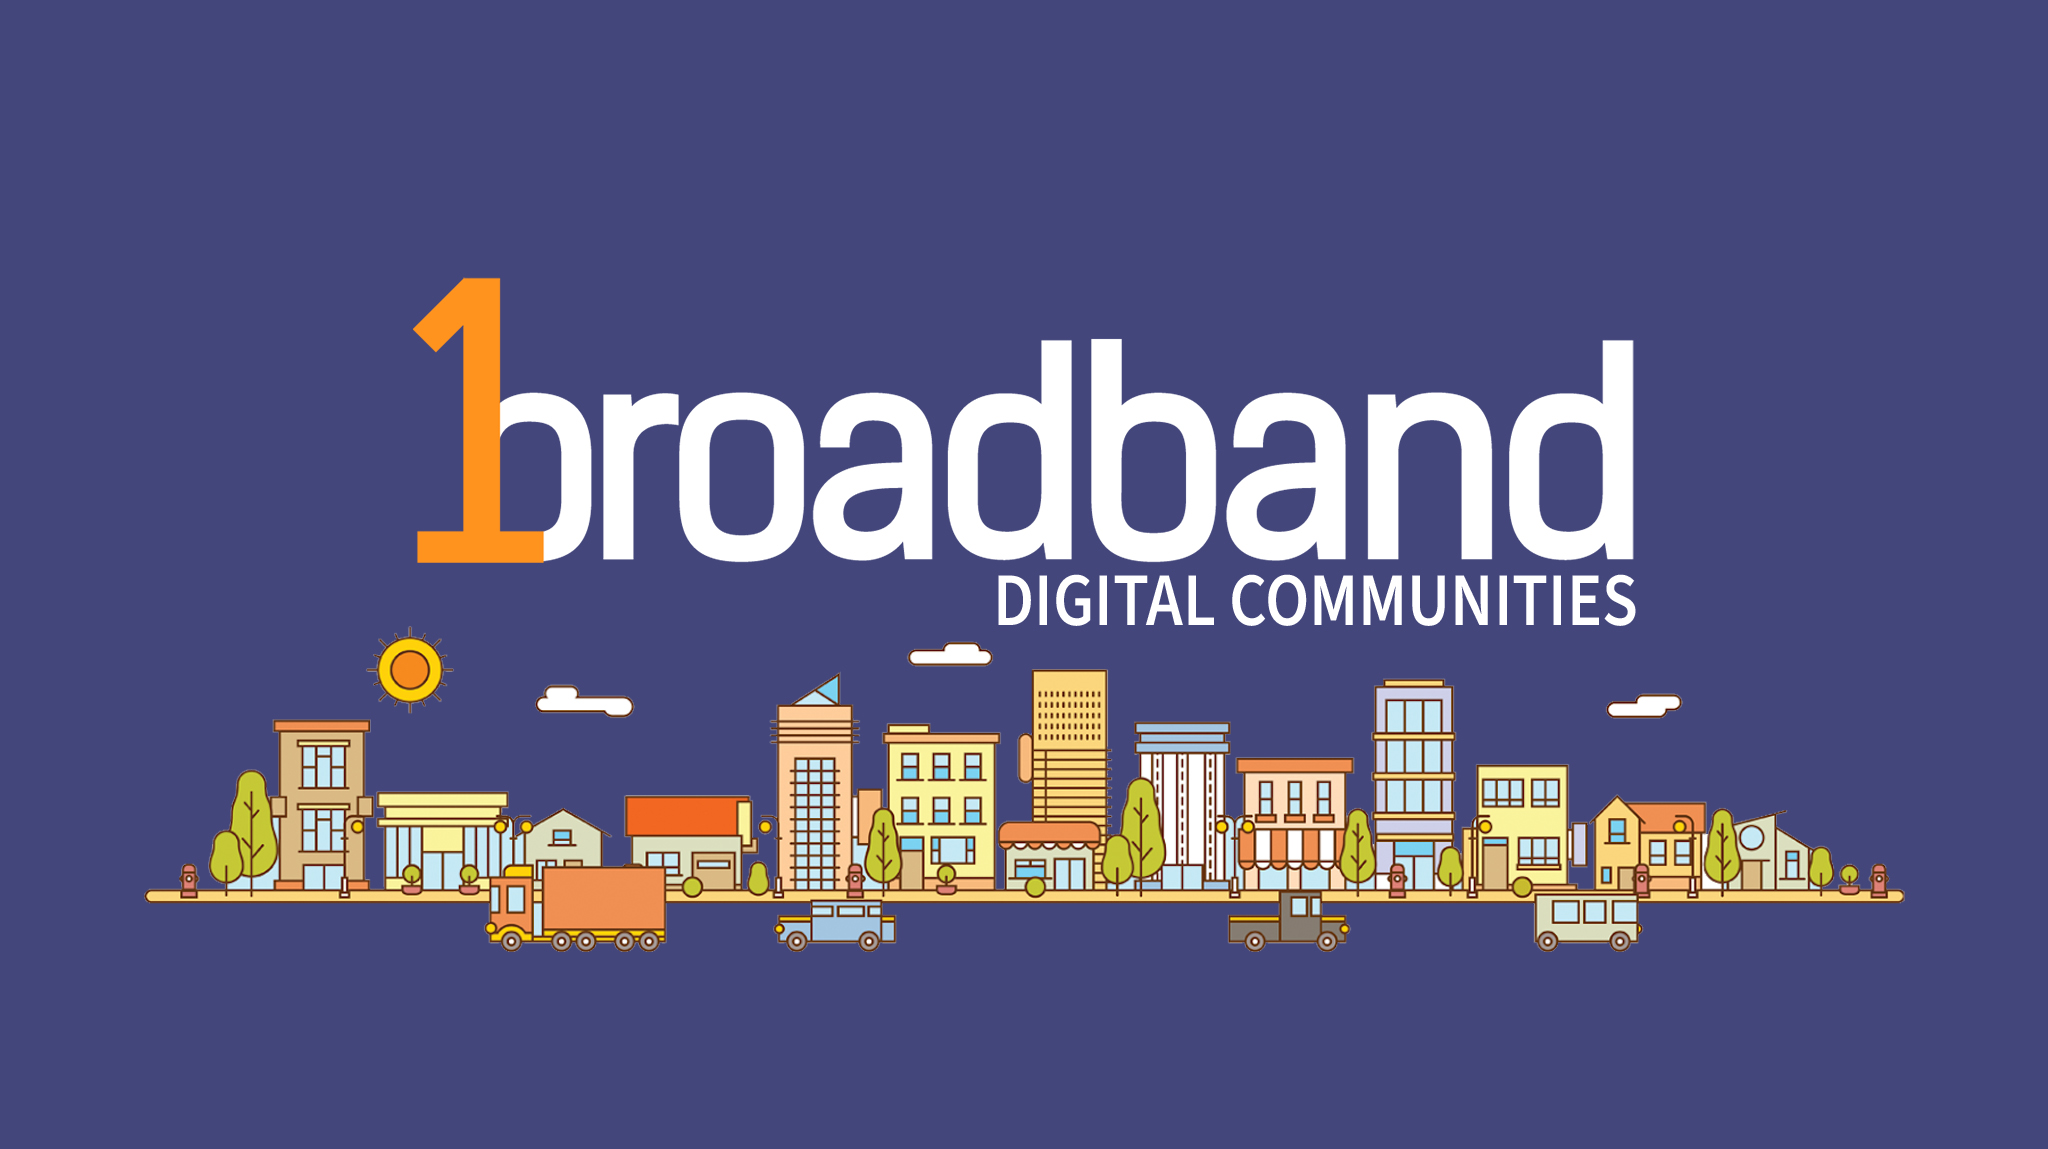 1Broadband Digital Communities